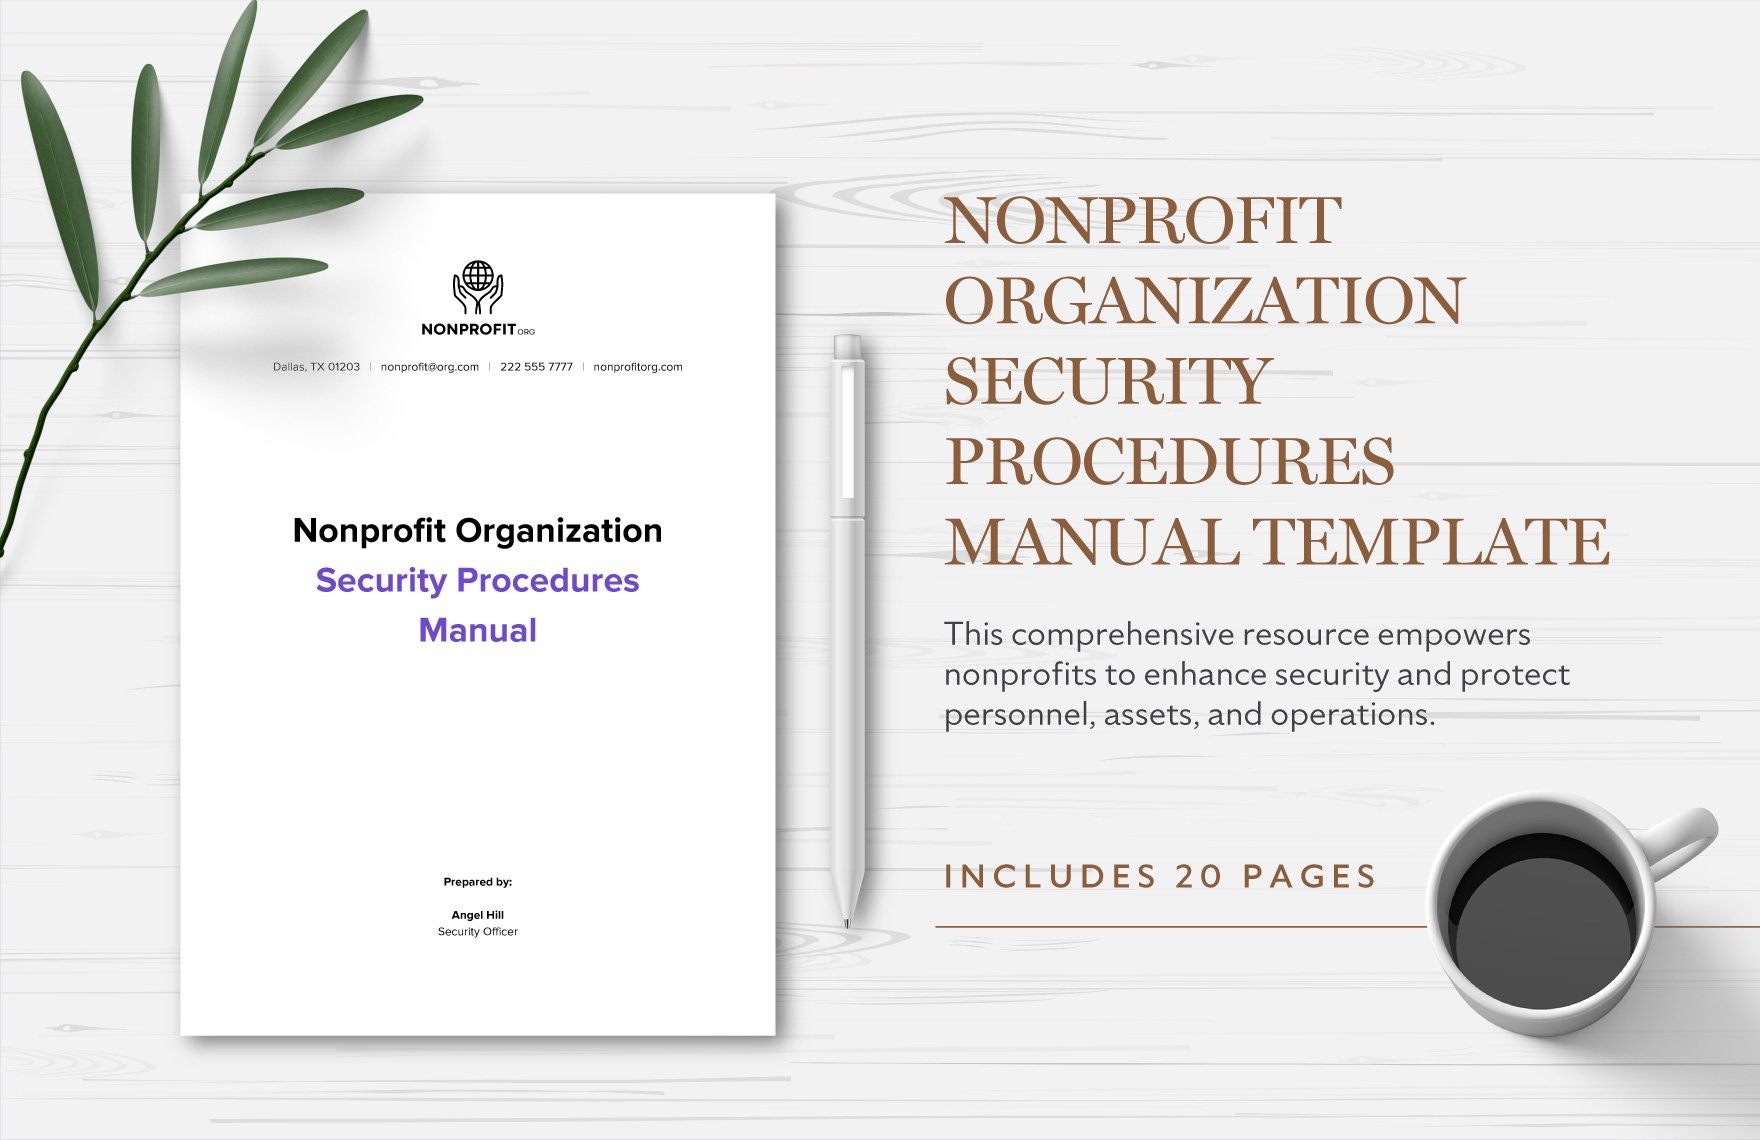 Nonprofit Organization Security Procedures Manual Template in Word, Google Docs, PDF